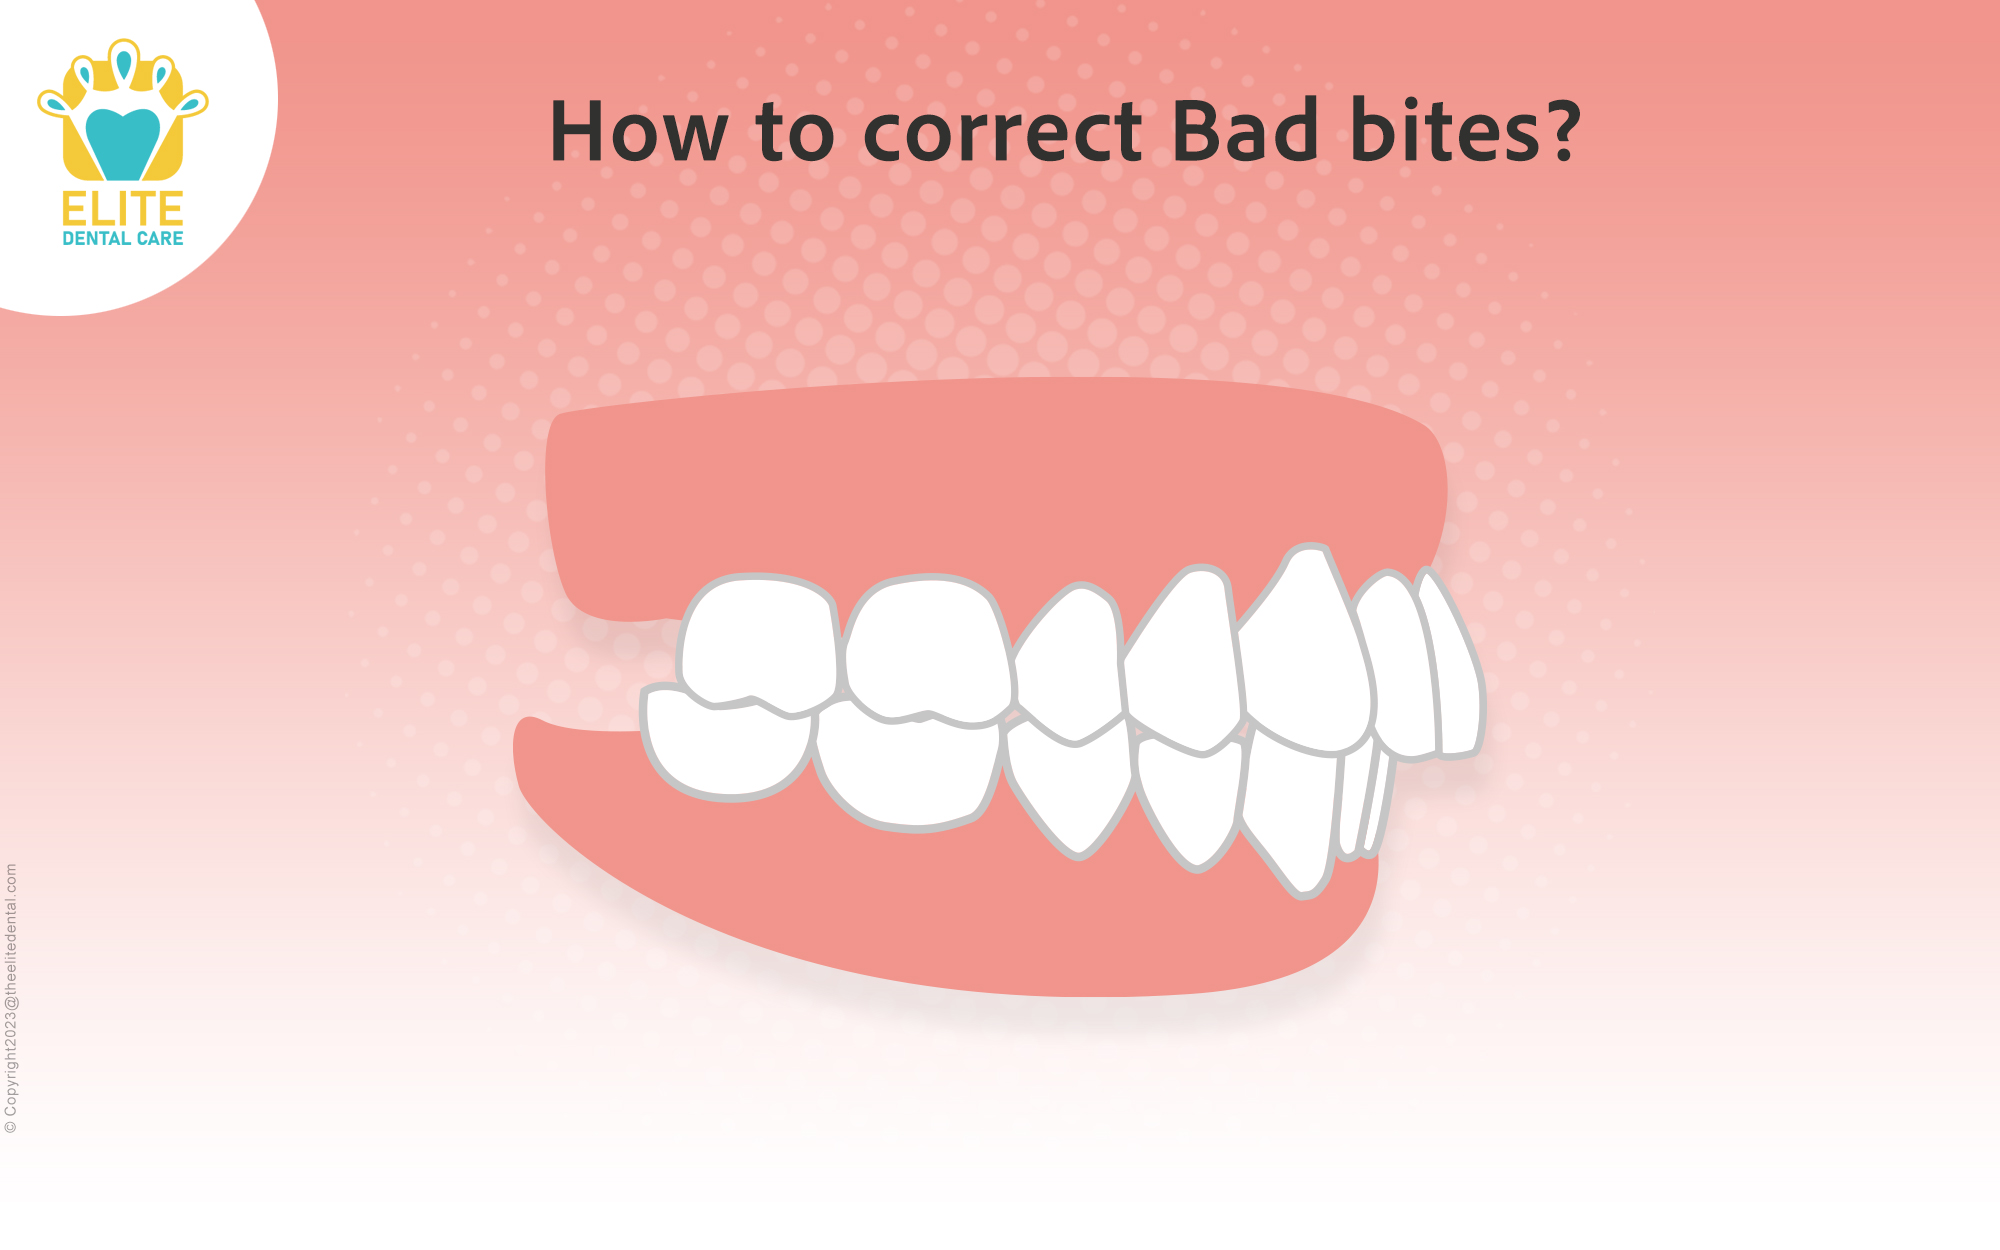 How to correct bad bites?